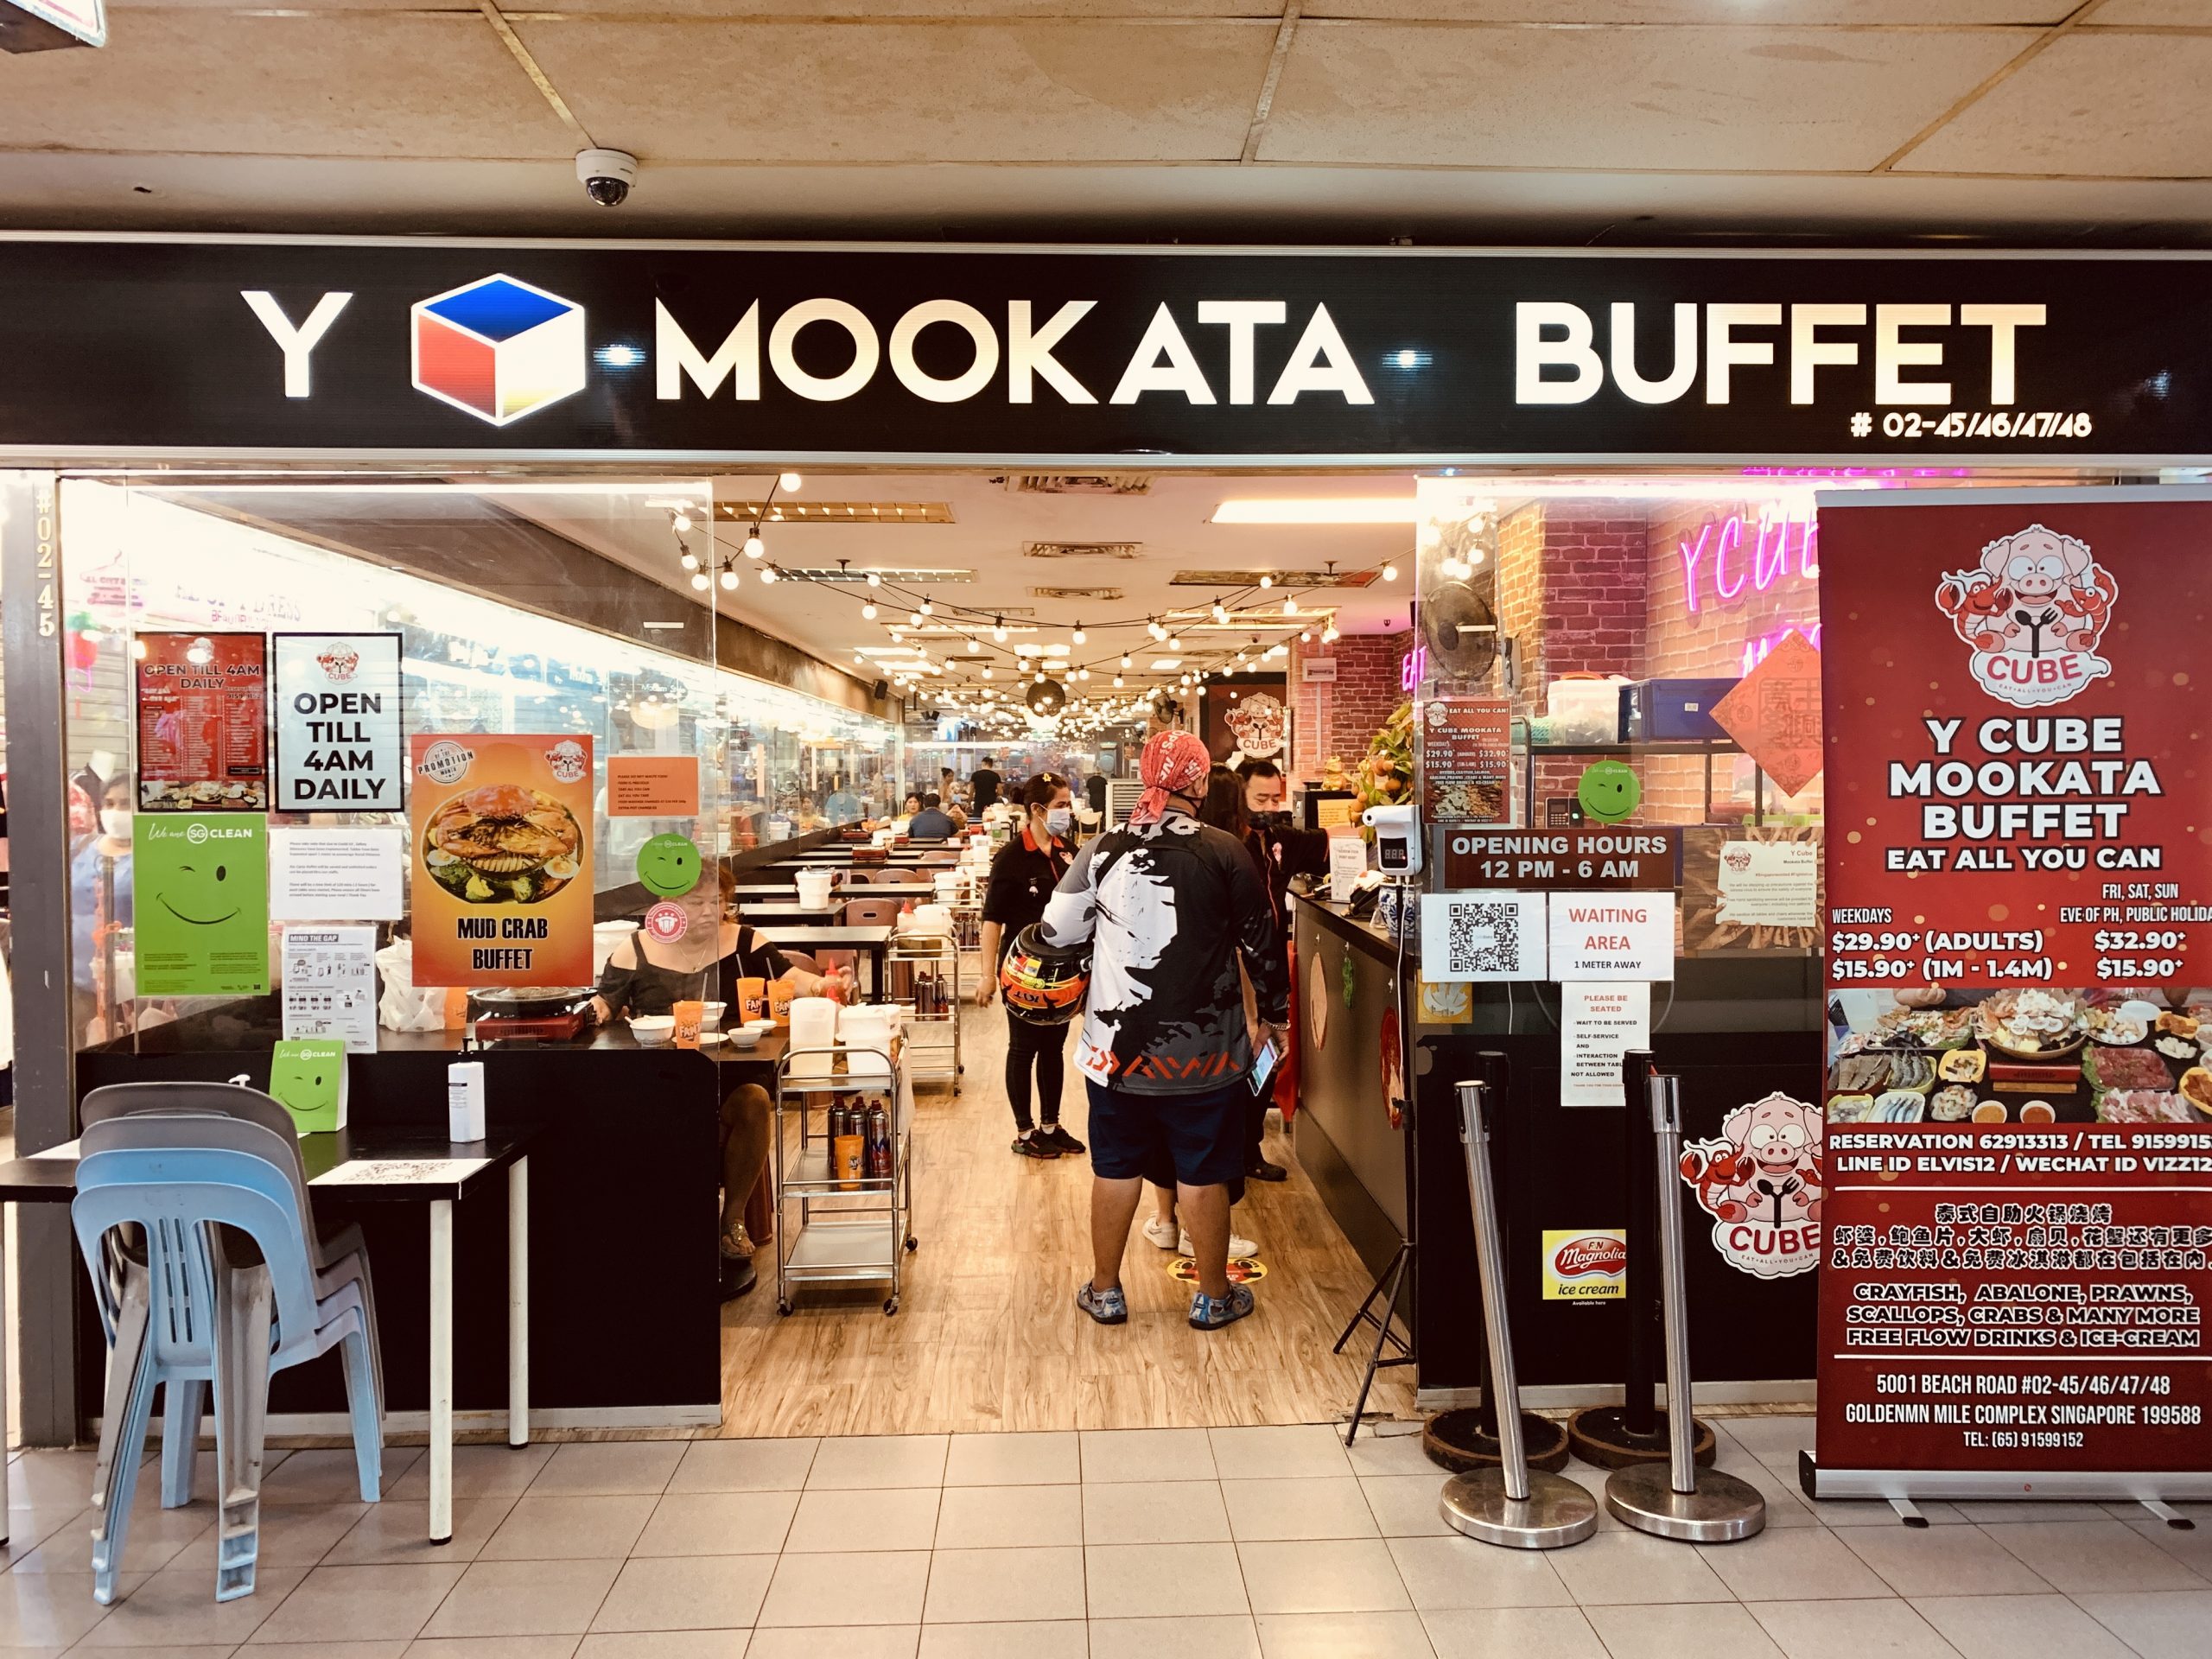 Y Cube Mookata Buffet - Restaurant Front